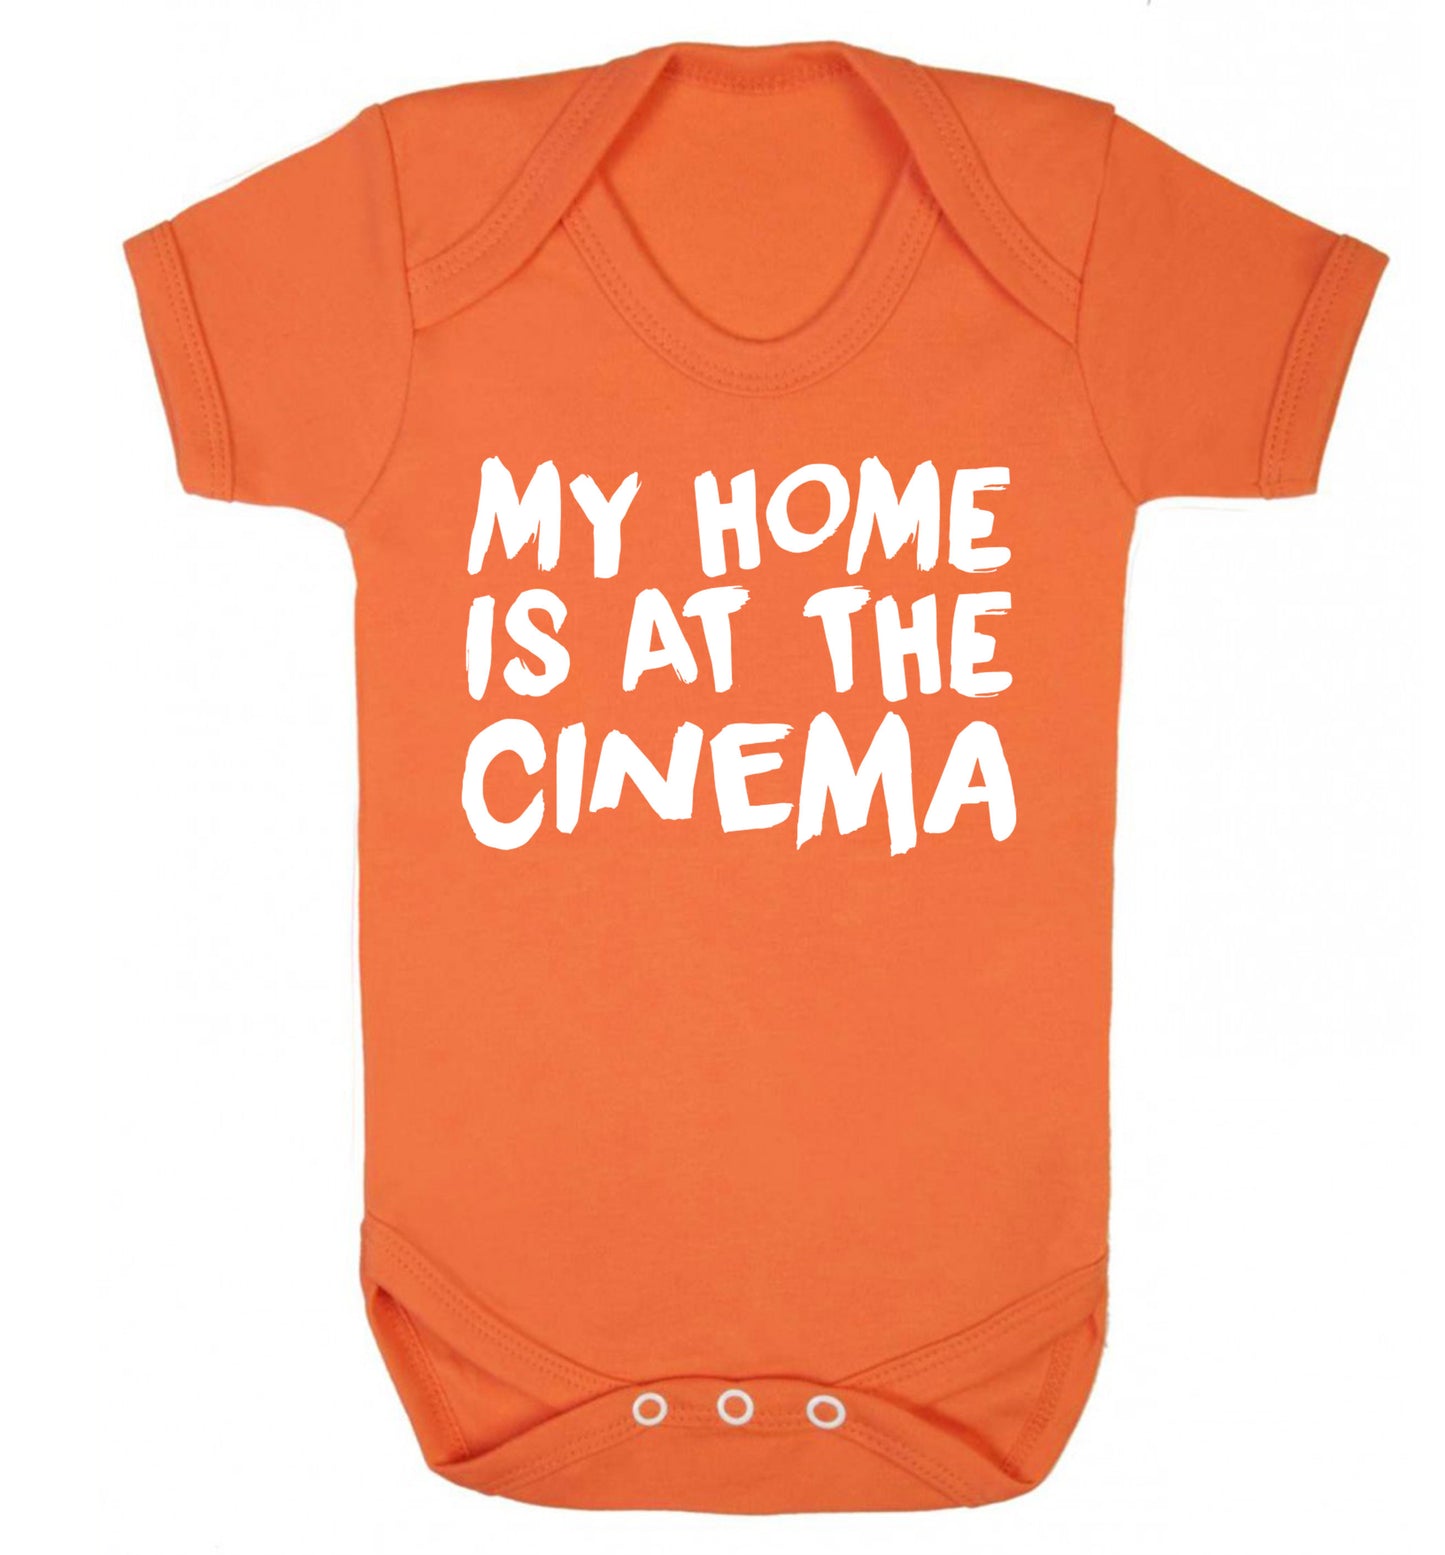 My home is at the cinema Baby Vest orange 18-24 months